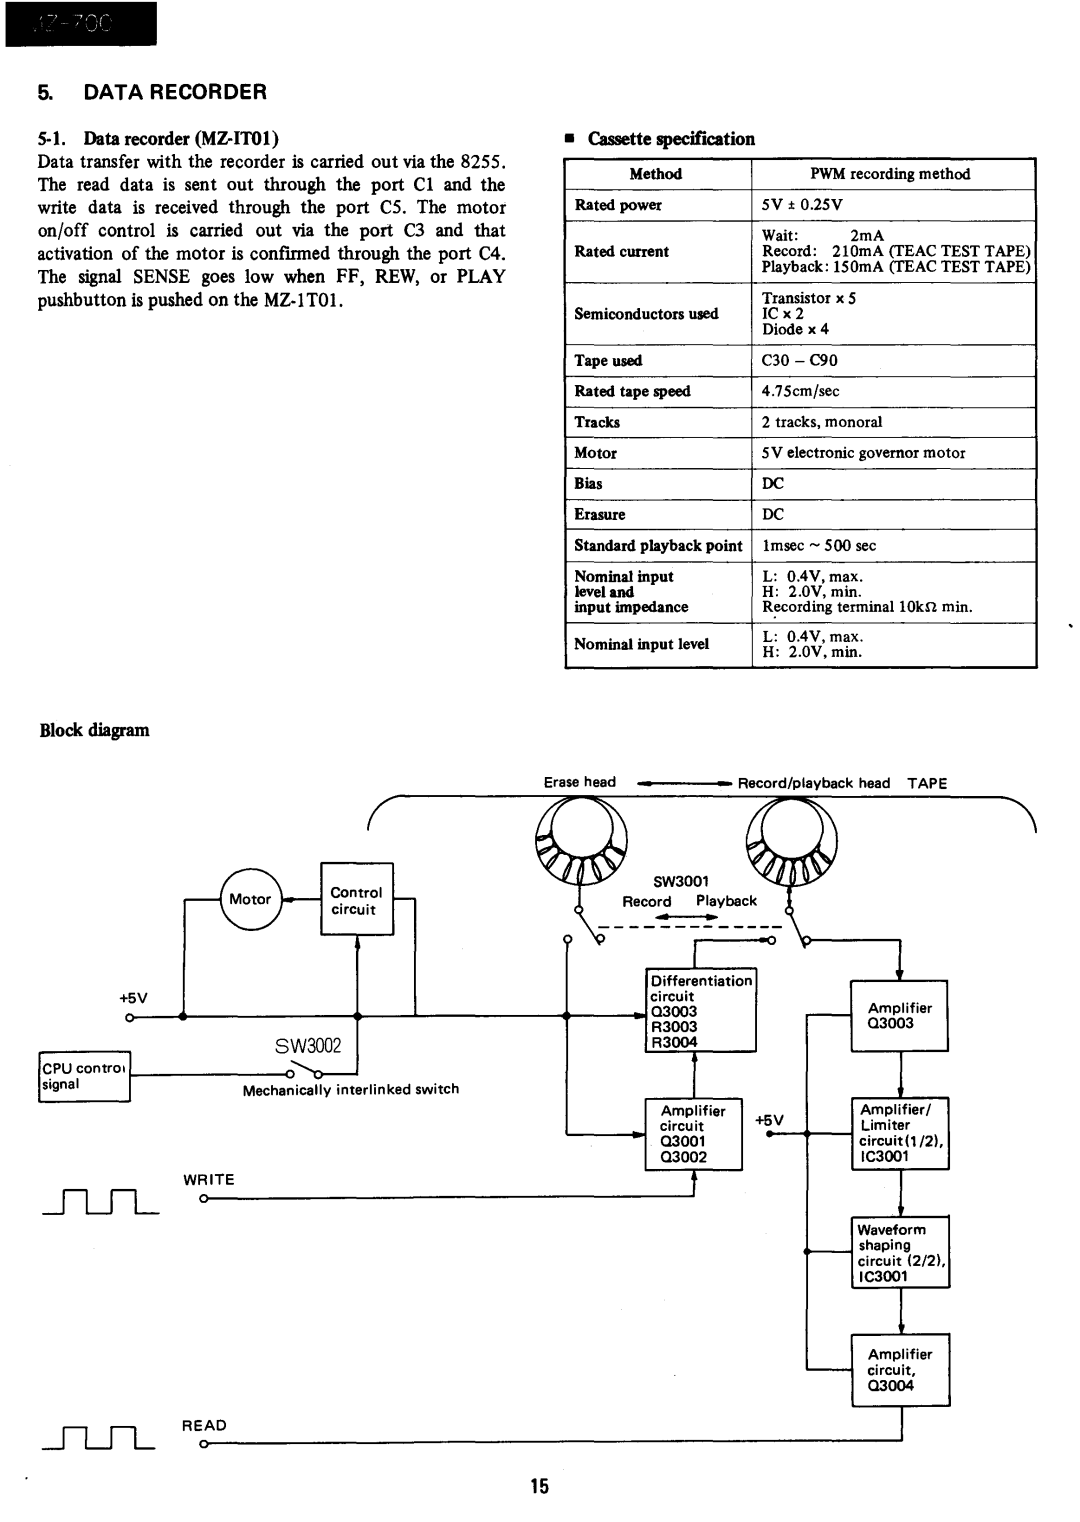 Sharp MZ-700 manual Data Recorder, Data recorder MZ-lT01, Cassette specification, Block diagram, SW3002 